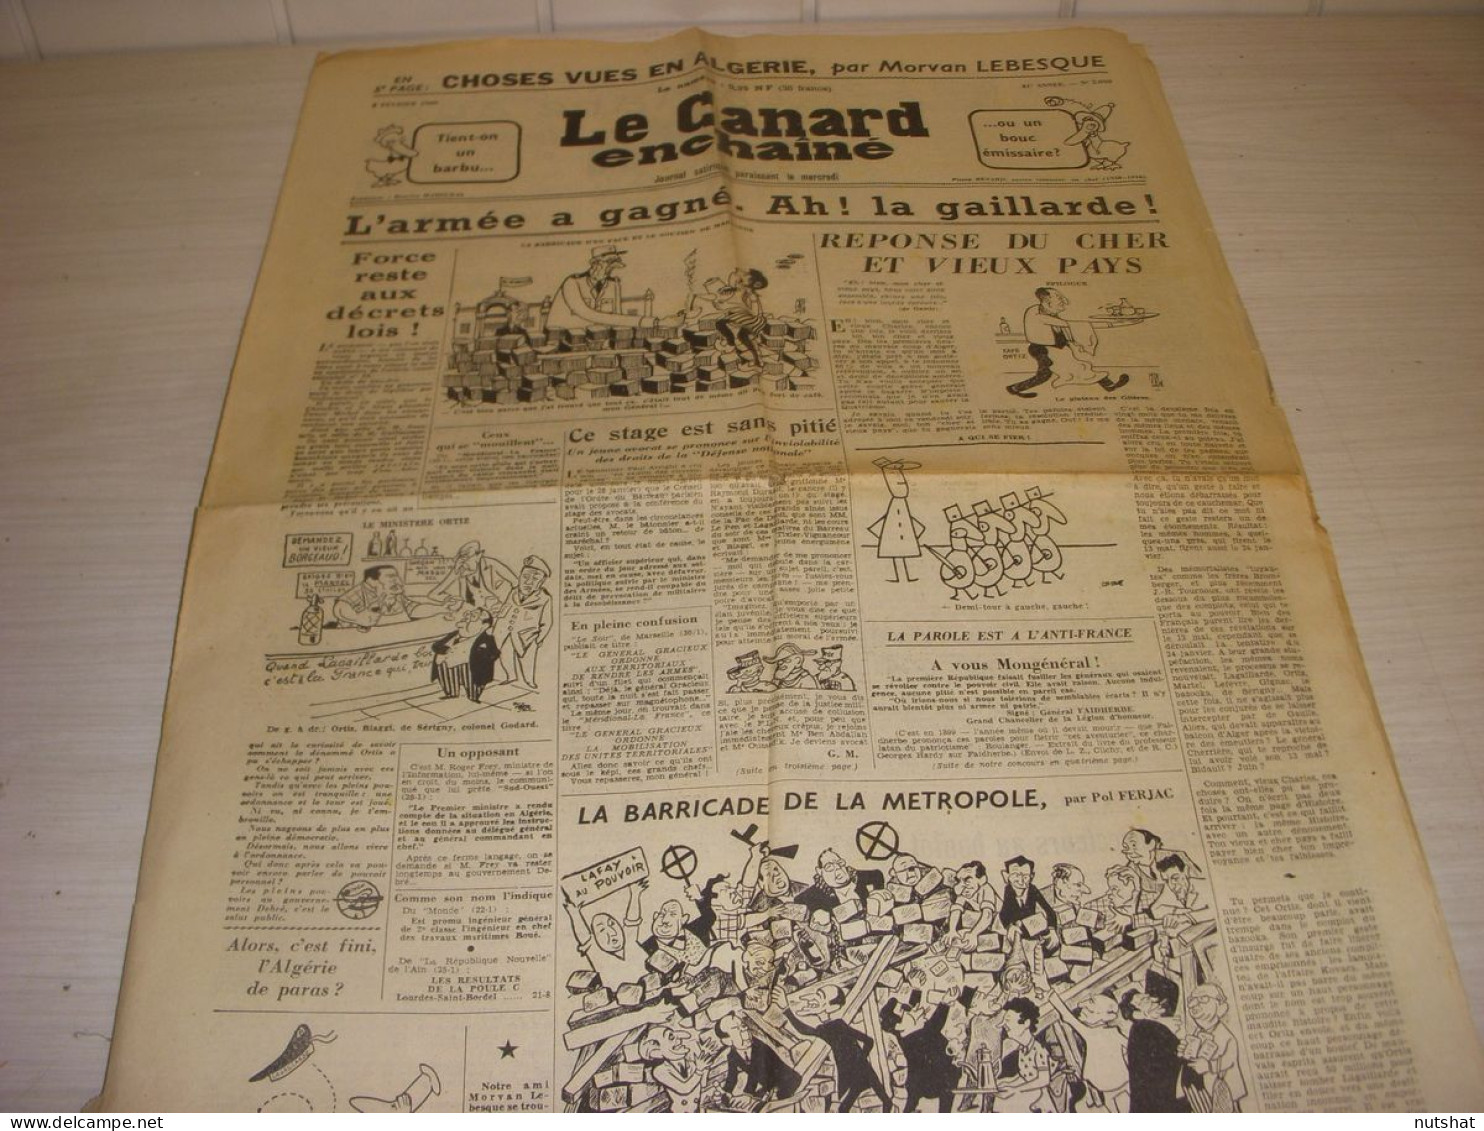 CANARD ENCHAINE 2050 03.02.1960 TCHERNIA Victoria THERAME CHOSES VUES En ALGERIE - Politics